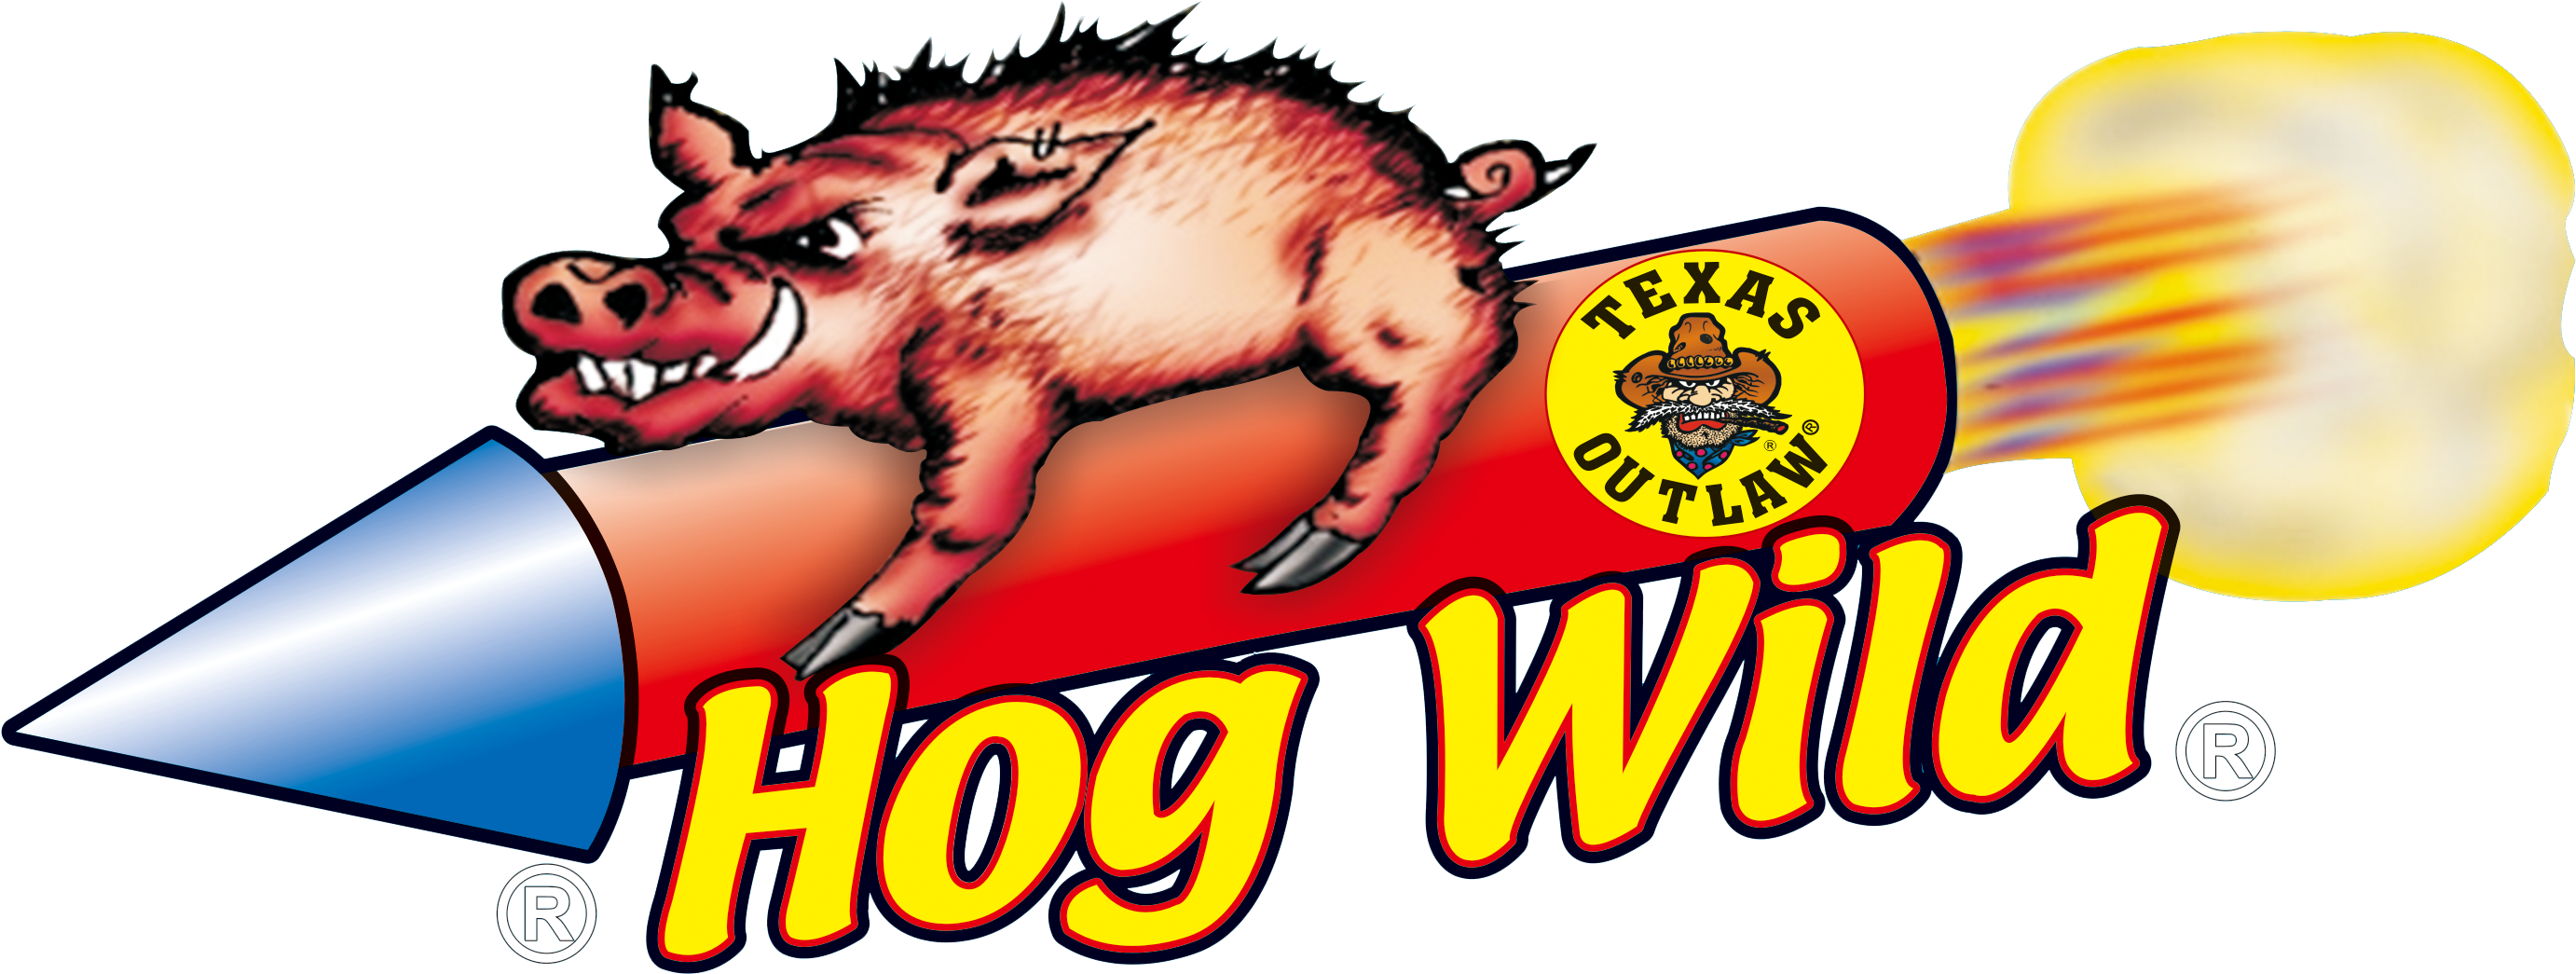 Hog Wild Fireworks Logo - Texas Outlaw Fireworks (2952x1535)